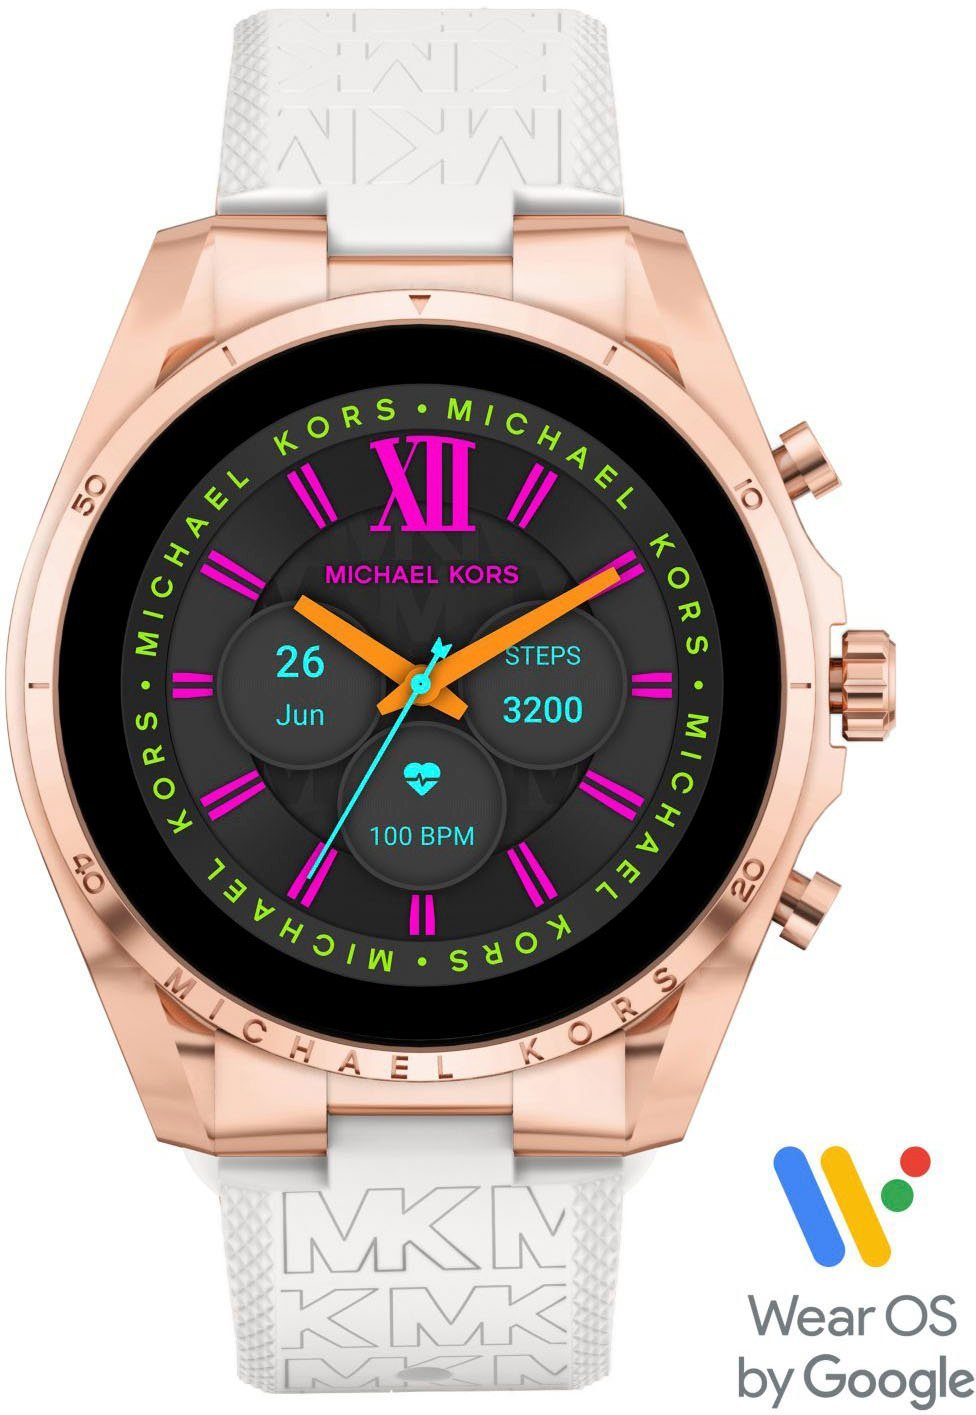 MICHAEL KORS ACCESS GEN 6 Google) by BRADSHAW, Smartwatch MKT5153 OS (Wear